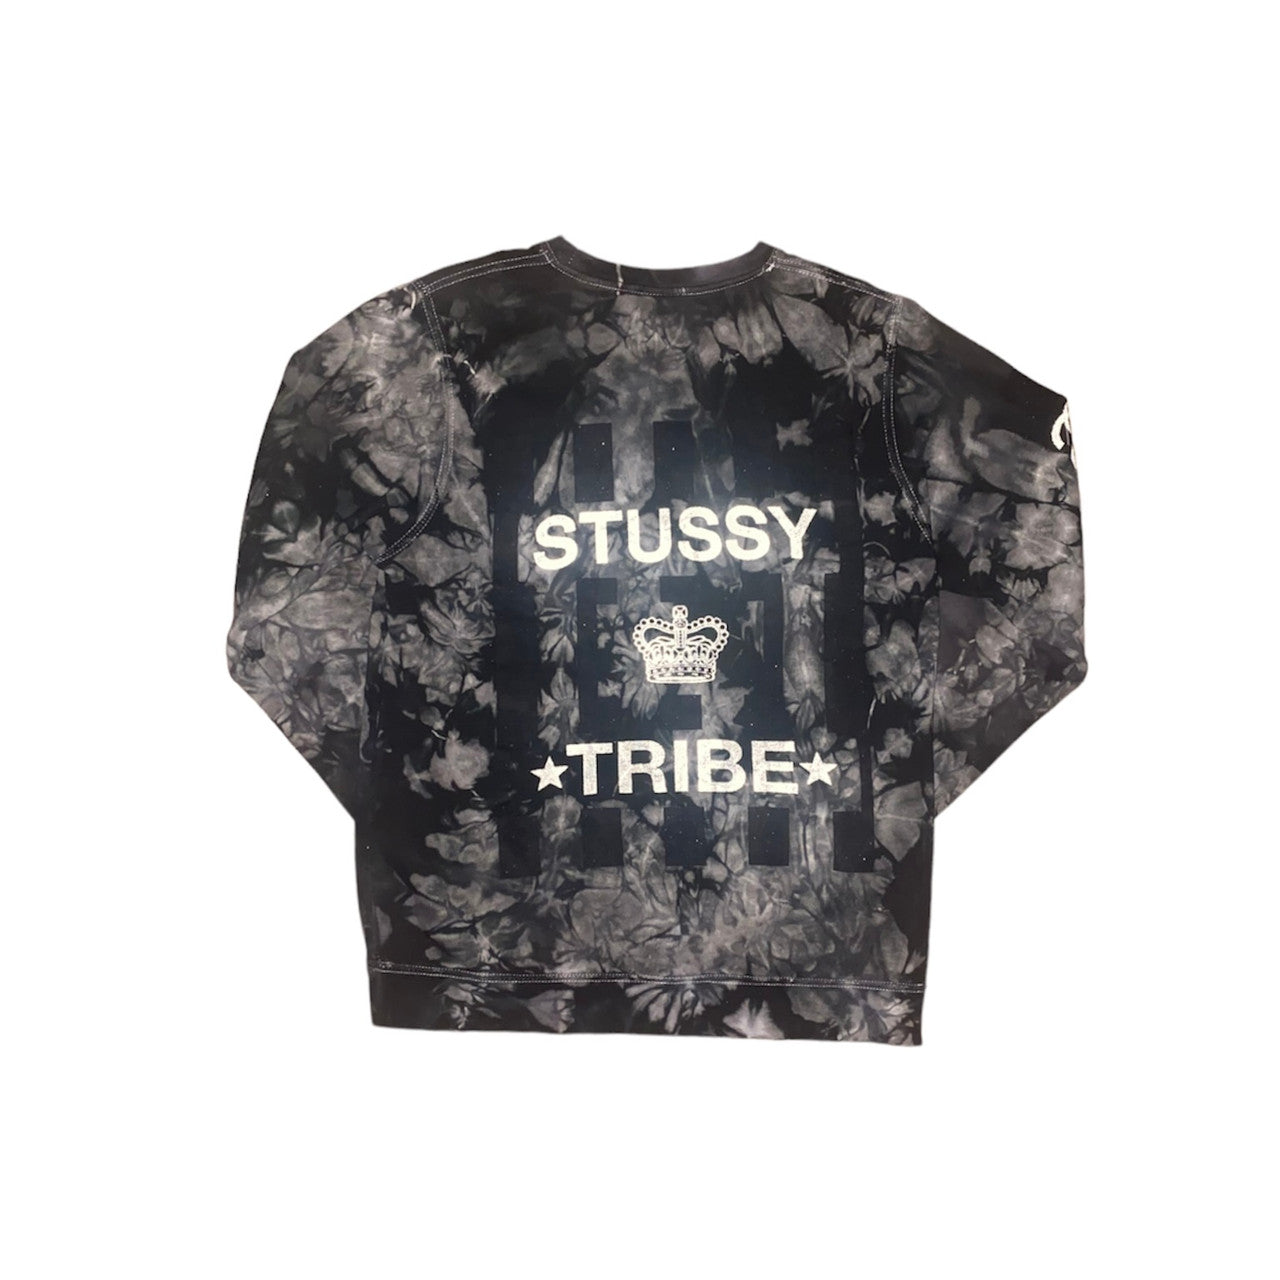 Stussy Tribe Reflective Crewneck Sweater